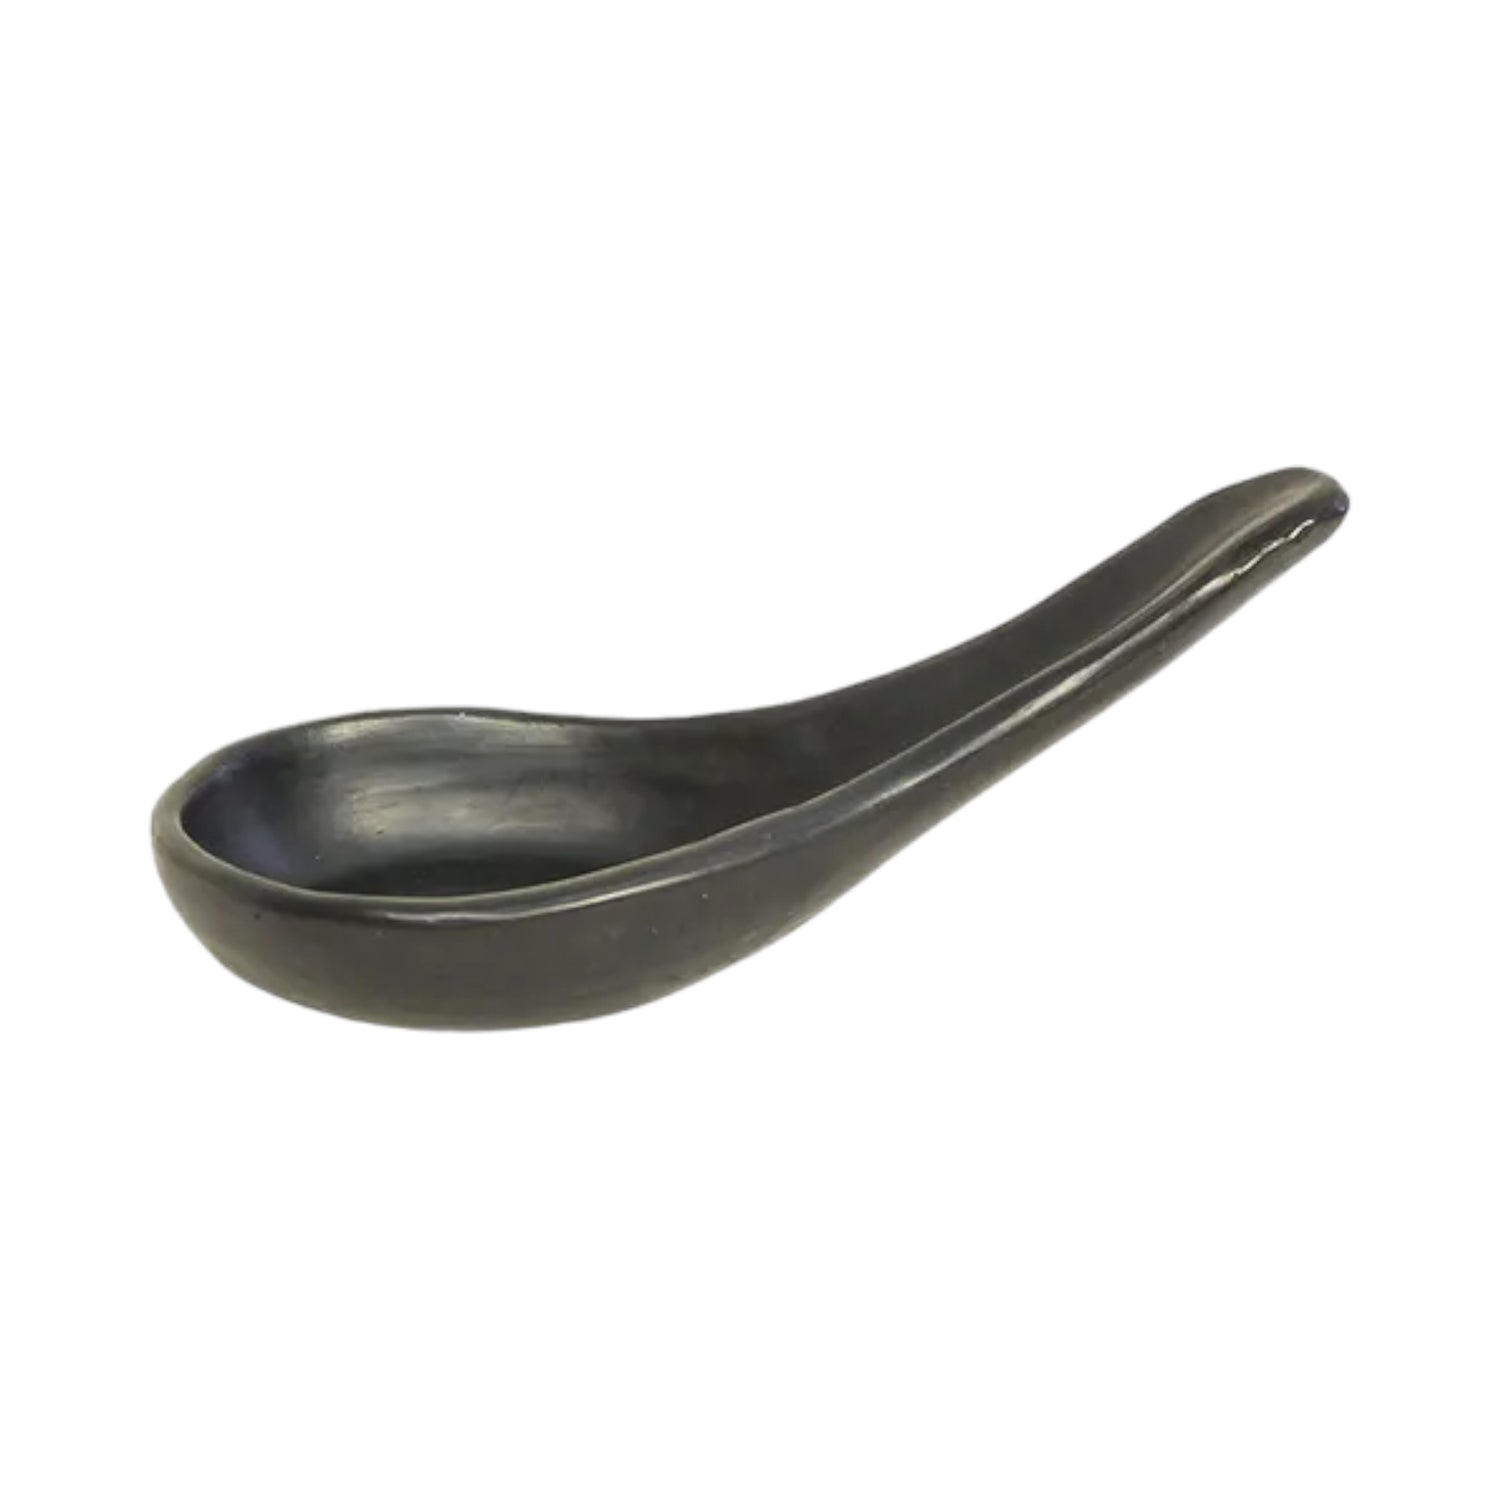 Flat Ladle Serving Spoon